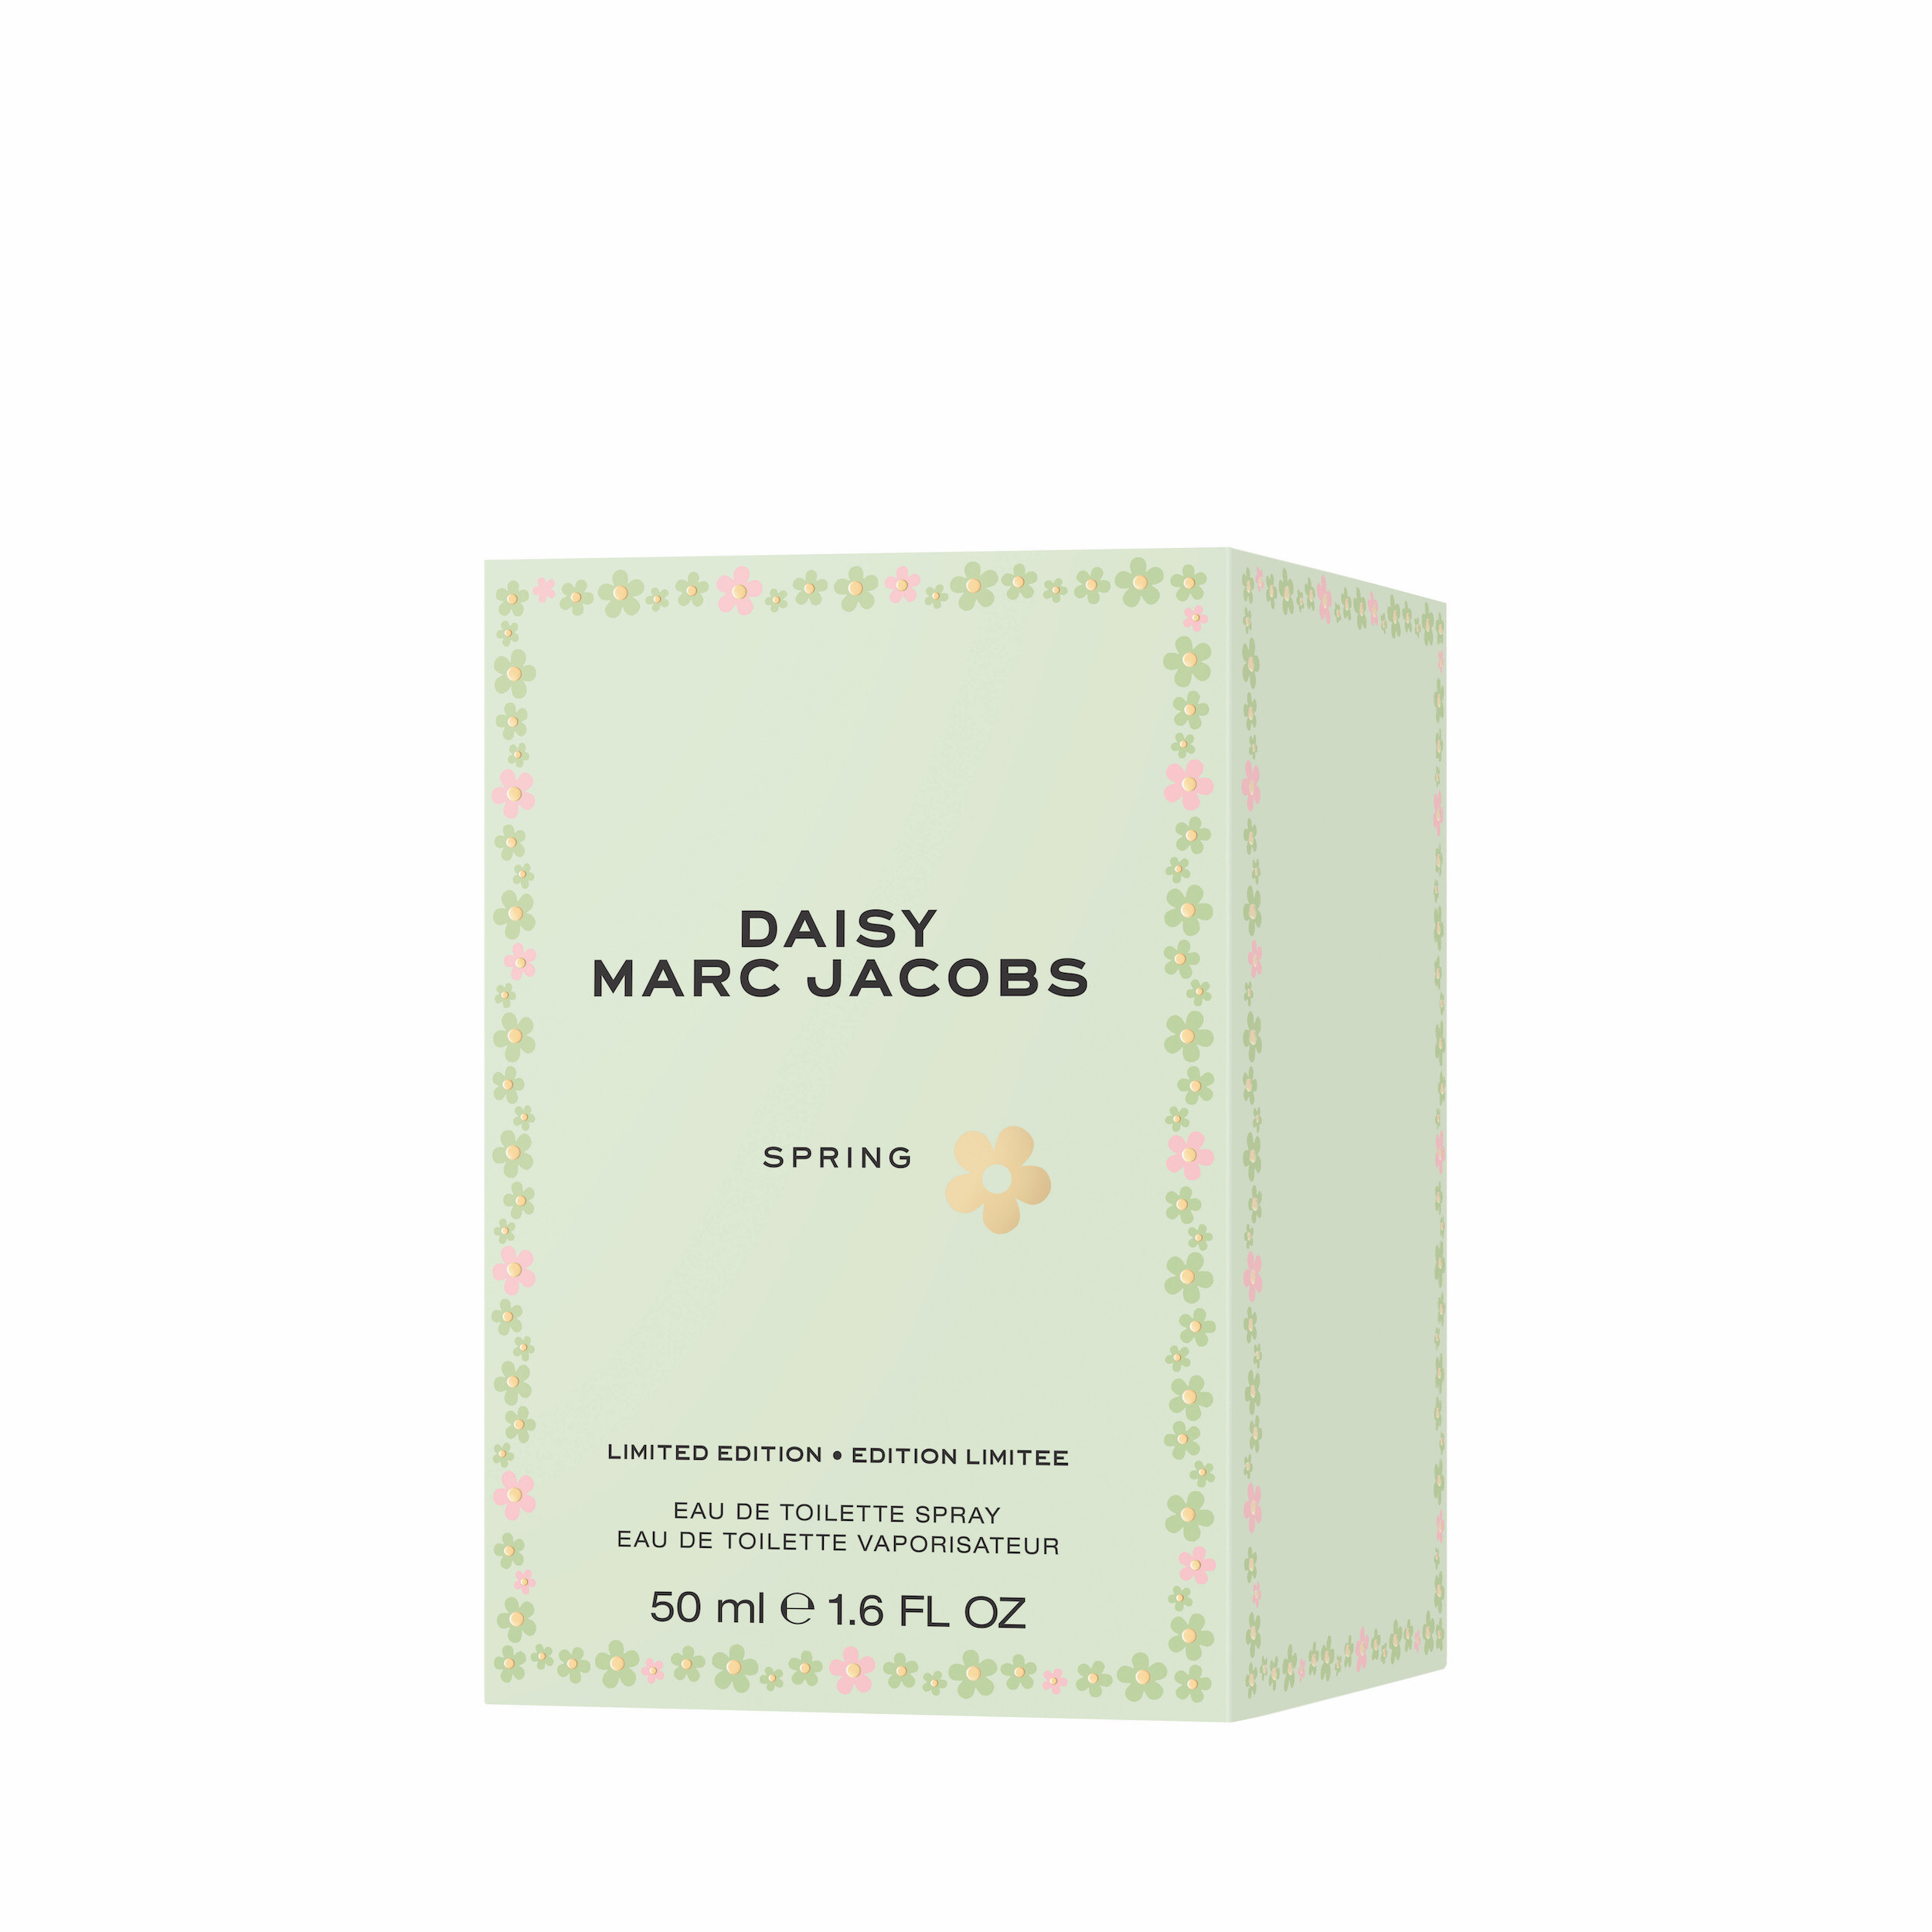 Parfum MARC JACOBS Daisy Spring EDT 50ml kaufen